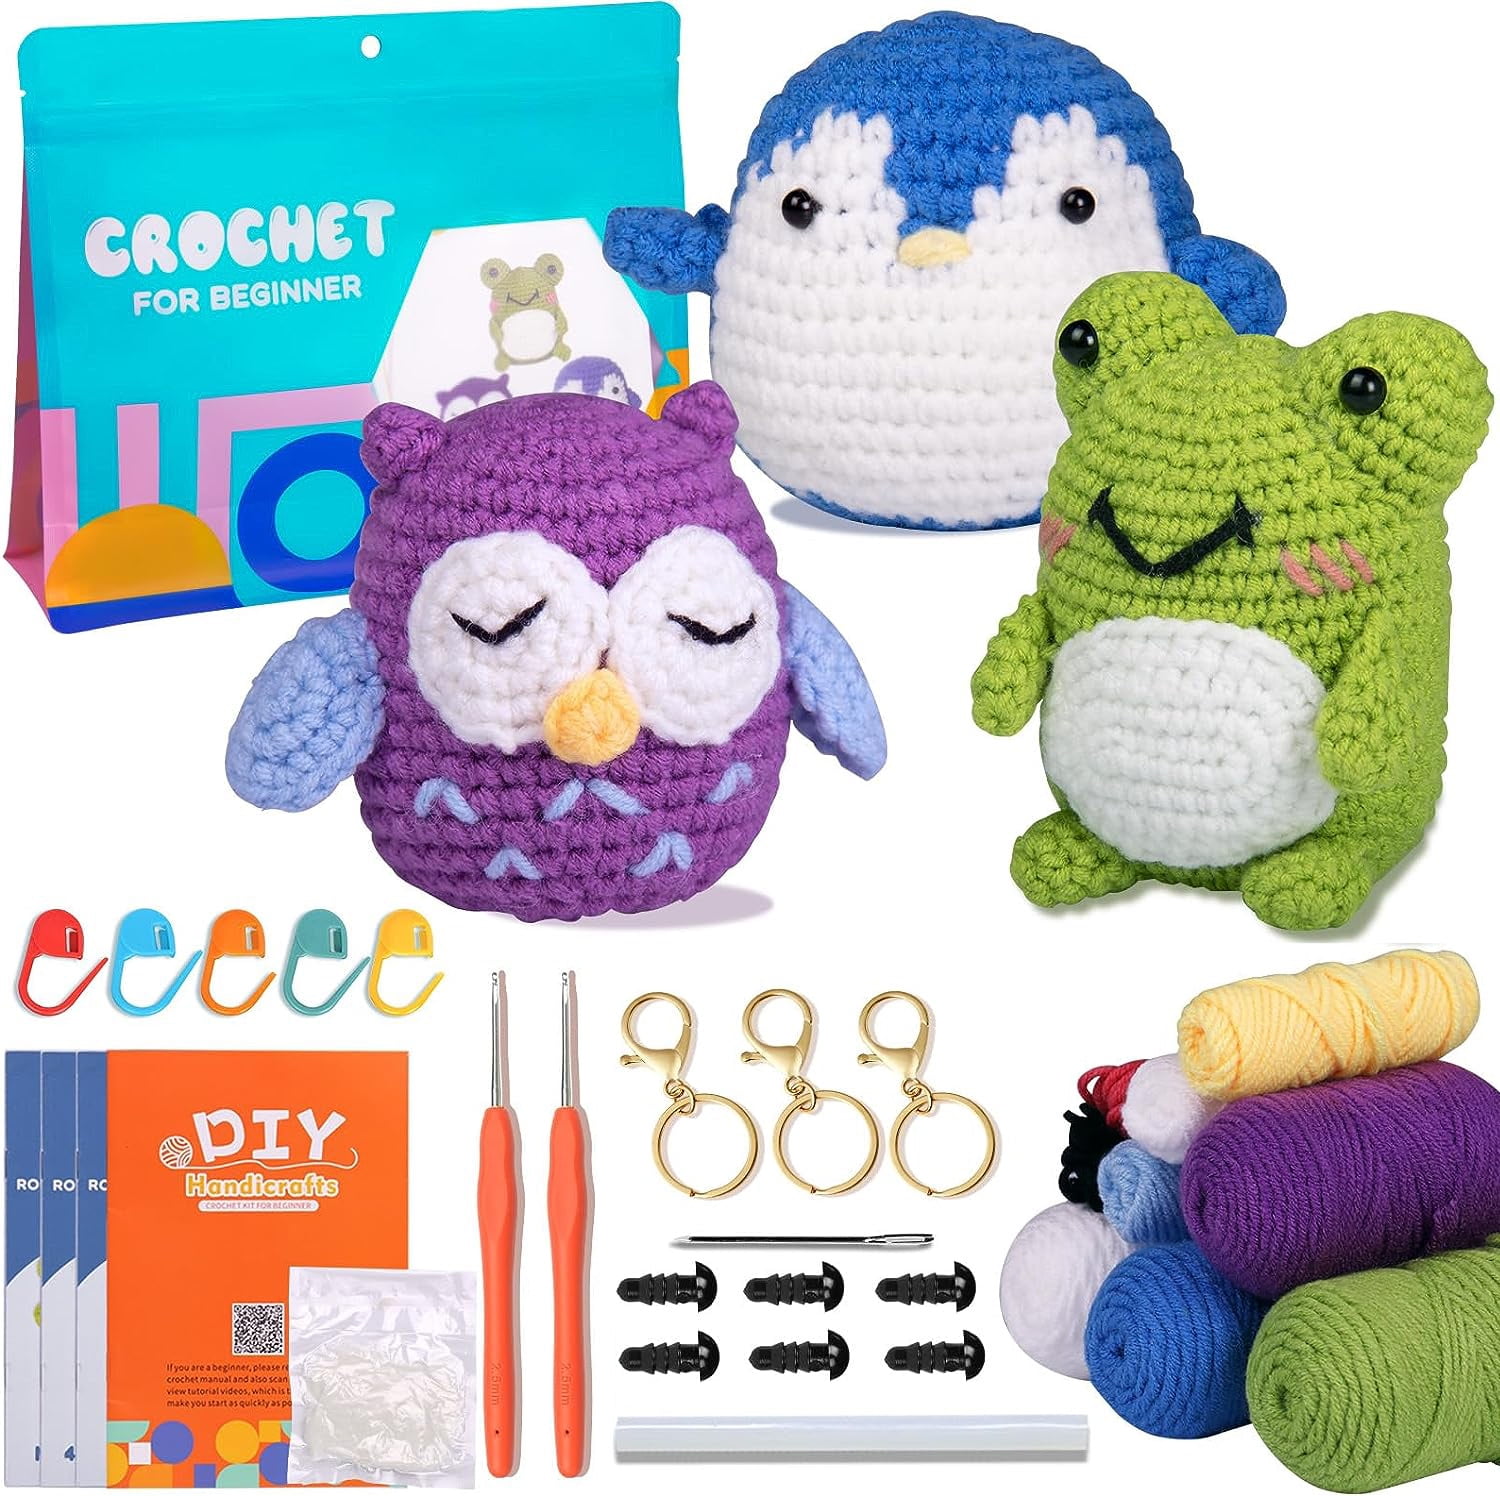  FJNATINH 3PCS Animals Crochet Kit for Beginners, Learn